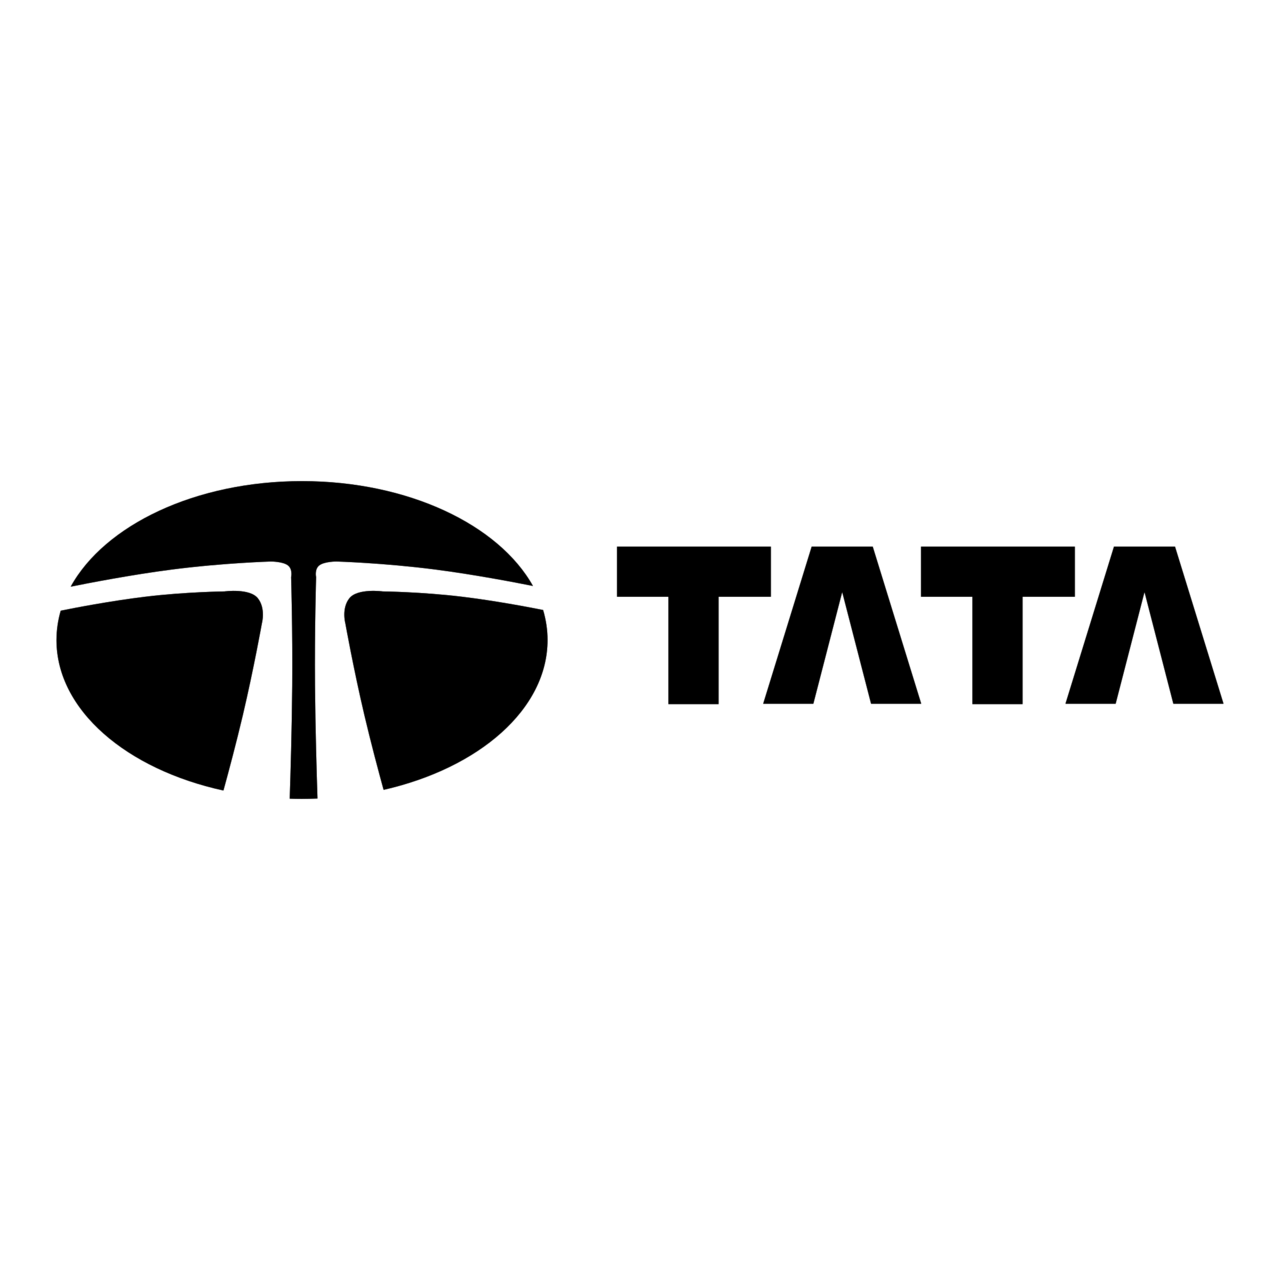 tata logo black and white